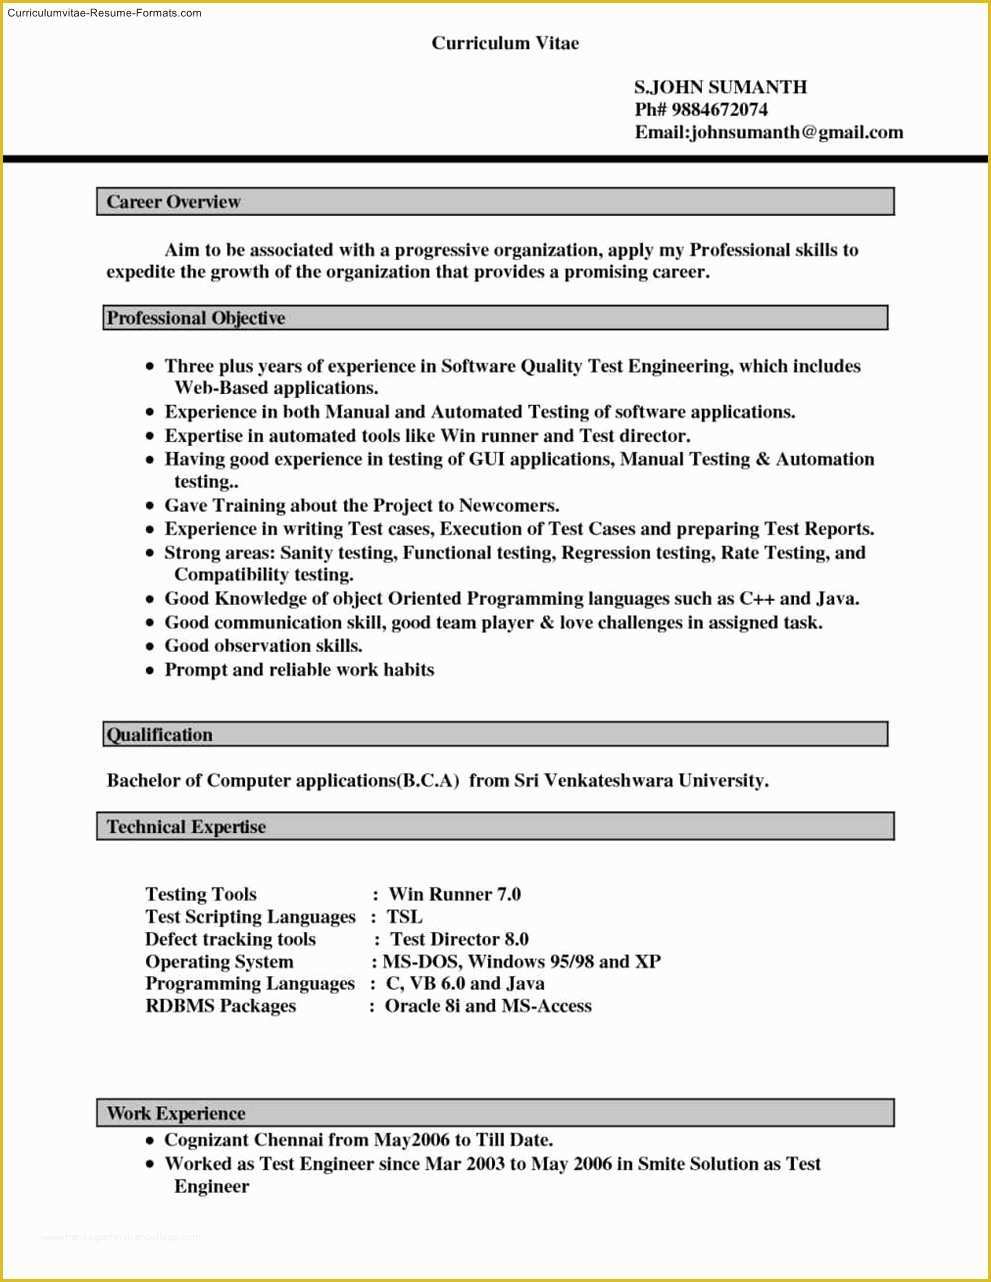 Cv Microsoft Word Template Free Of Free Resume Templates for Microsoft Word 2007 Free